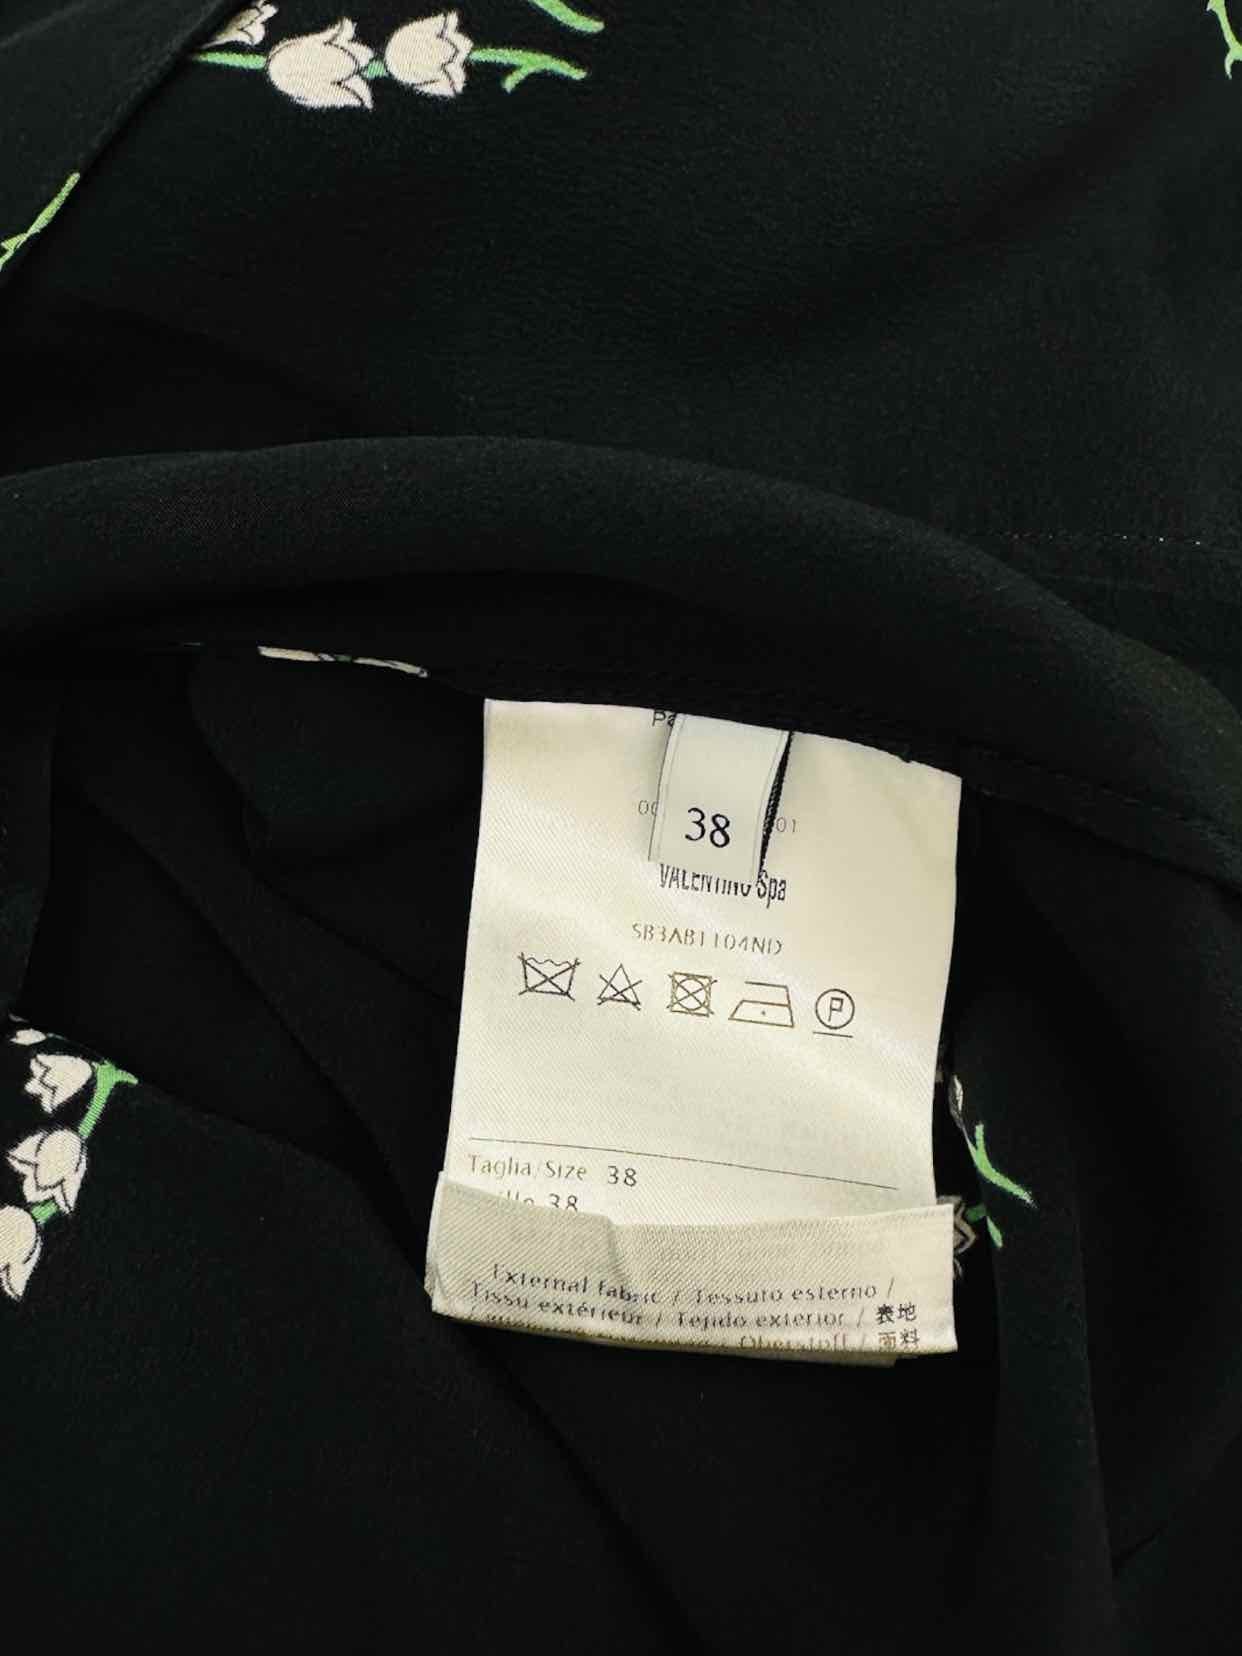 VALENTINO Pyjama Black w/ Green Floral Shirt